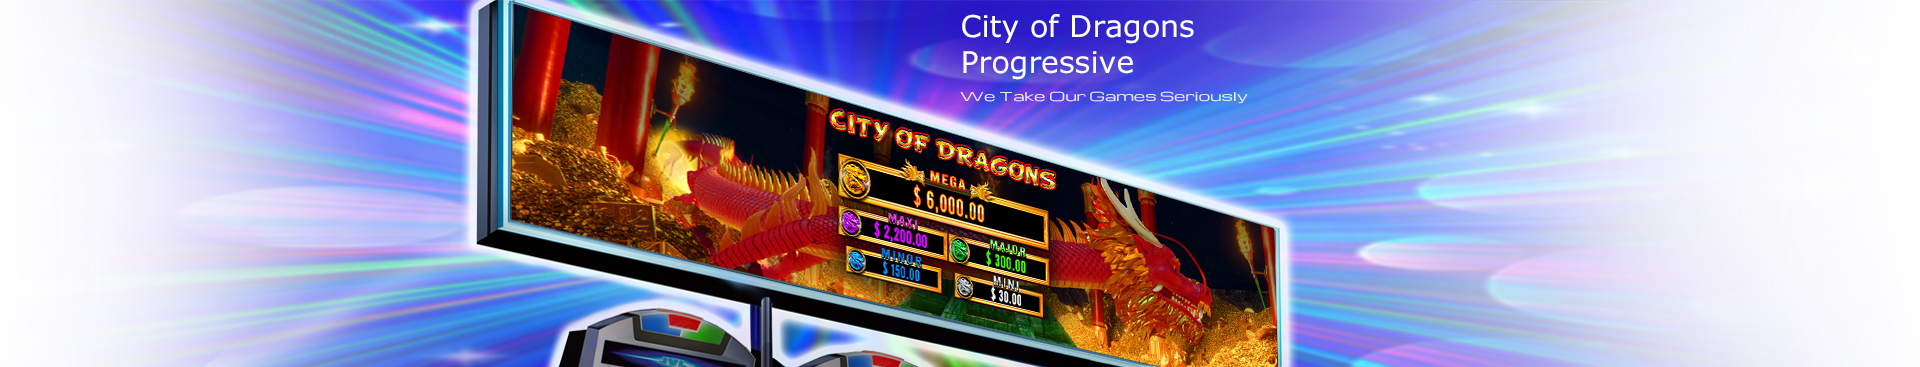 City of Dragons Progressive